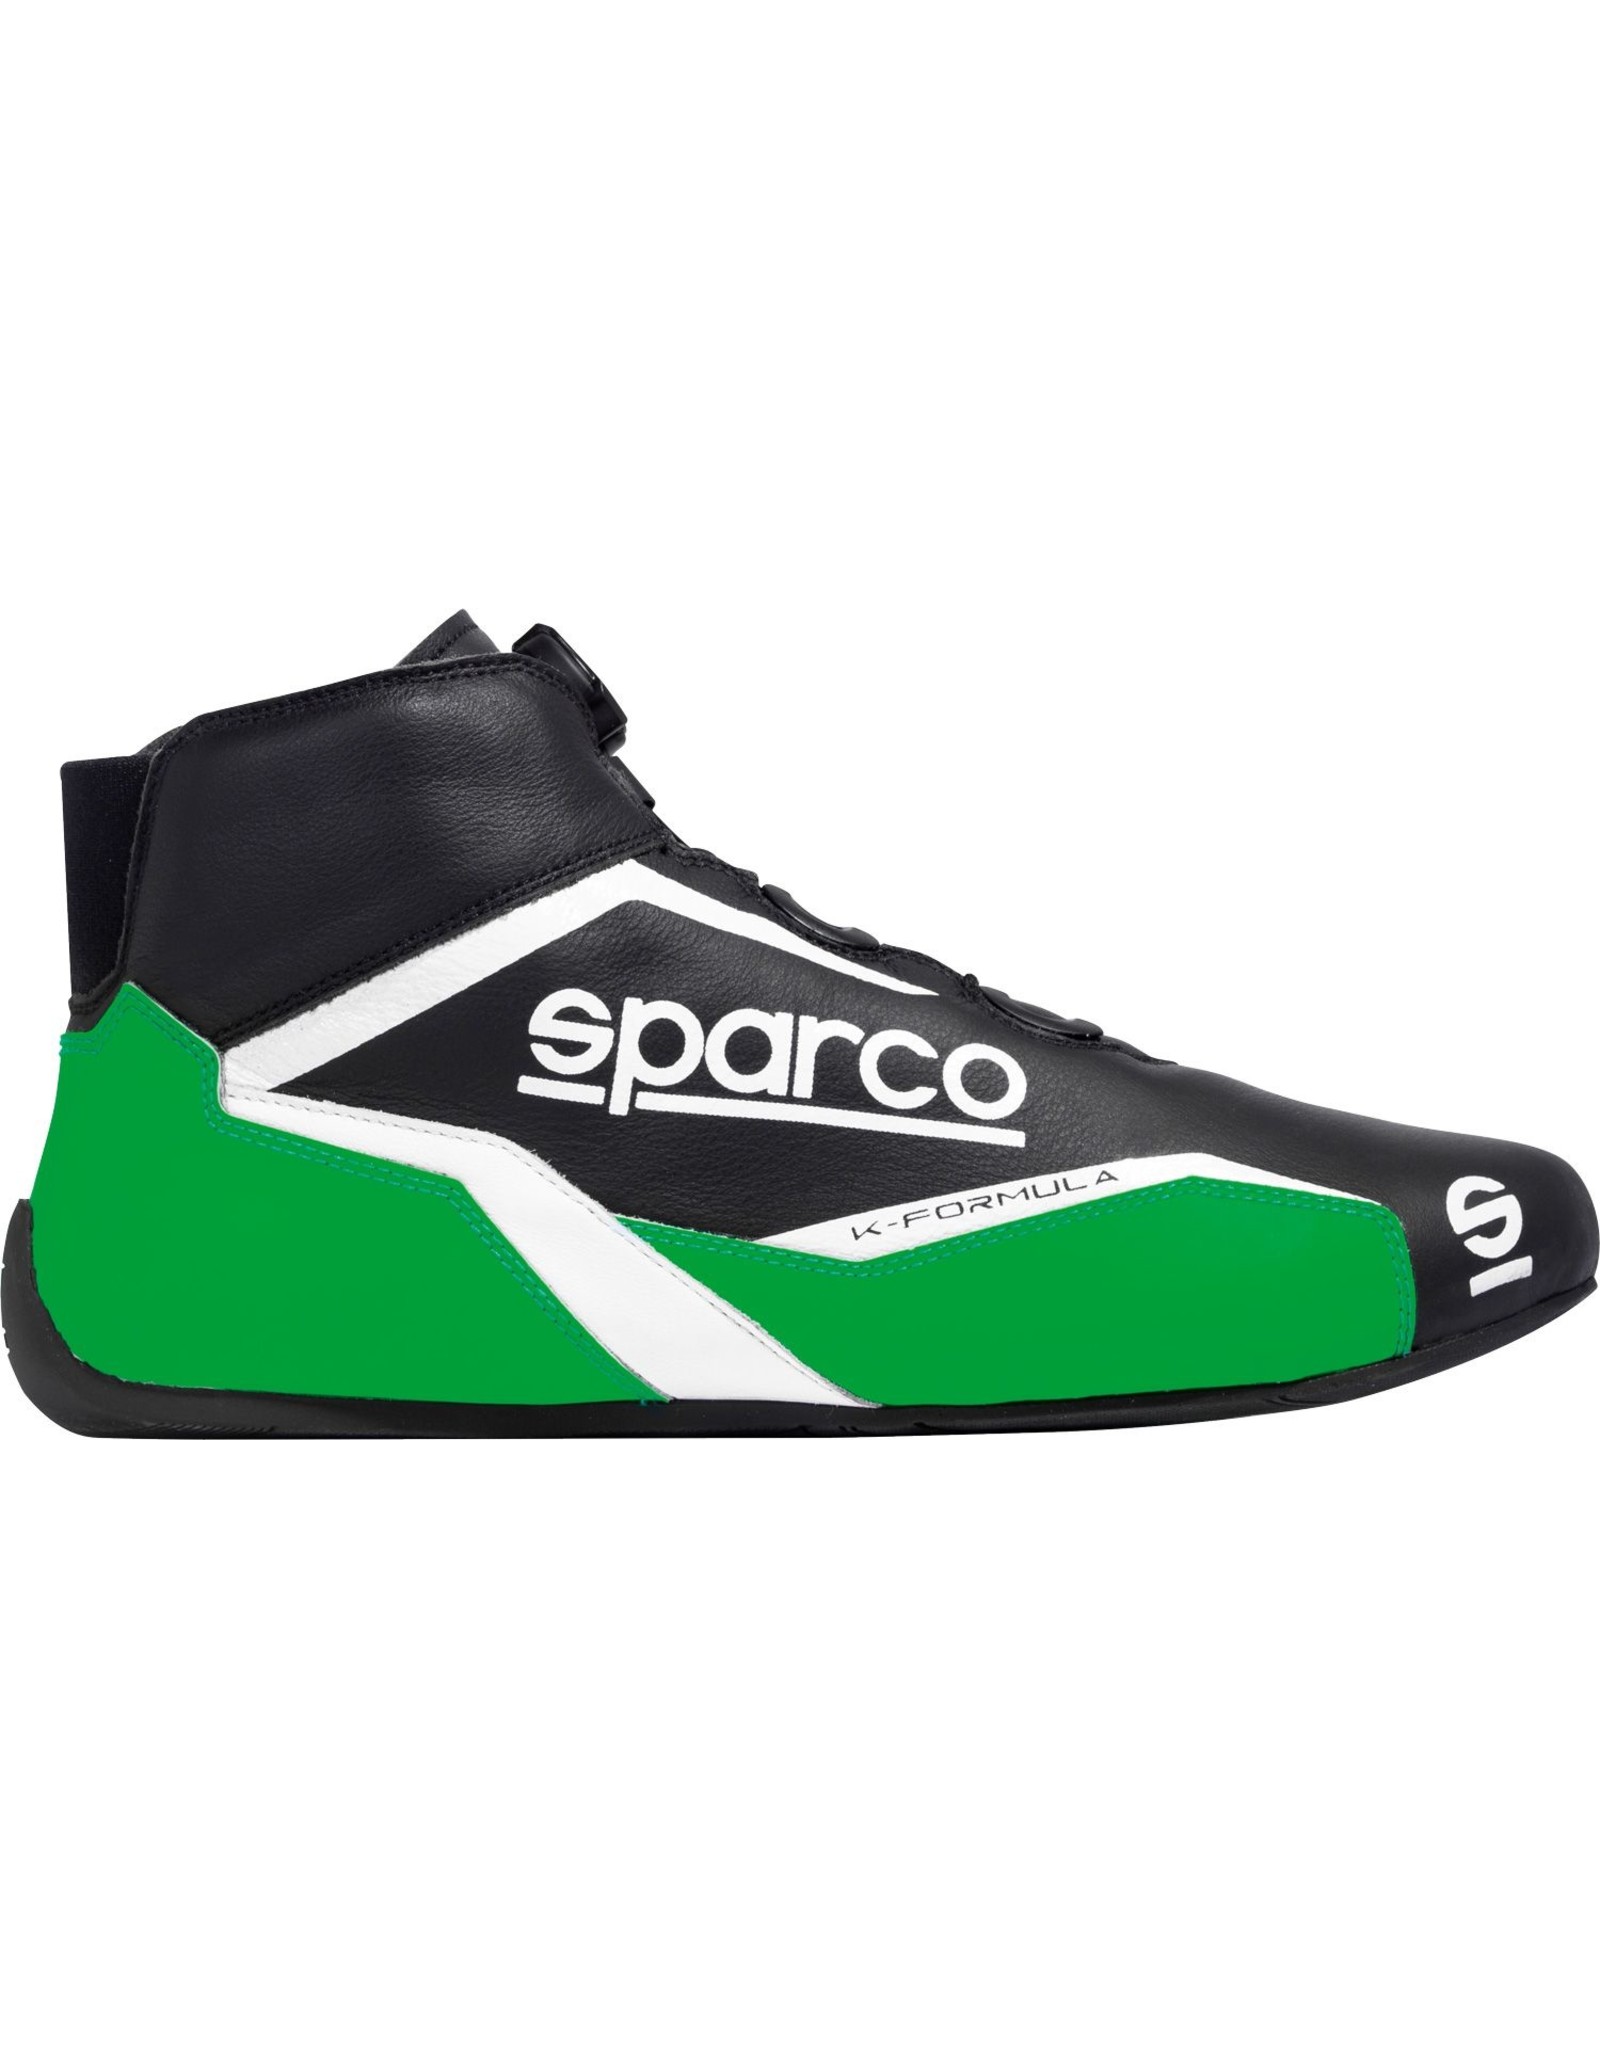 Sparco Sparco K-formula Black / green